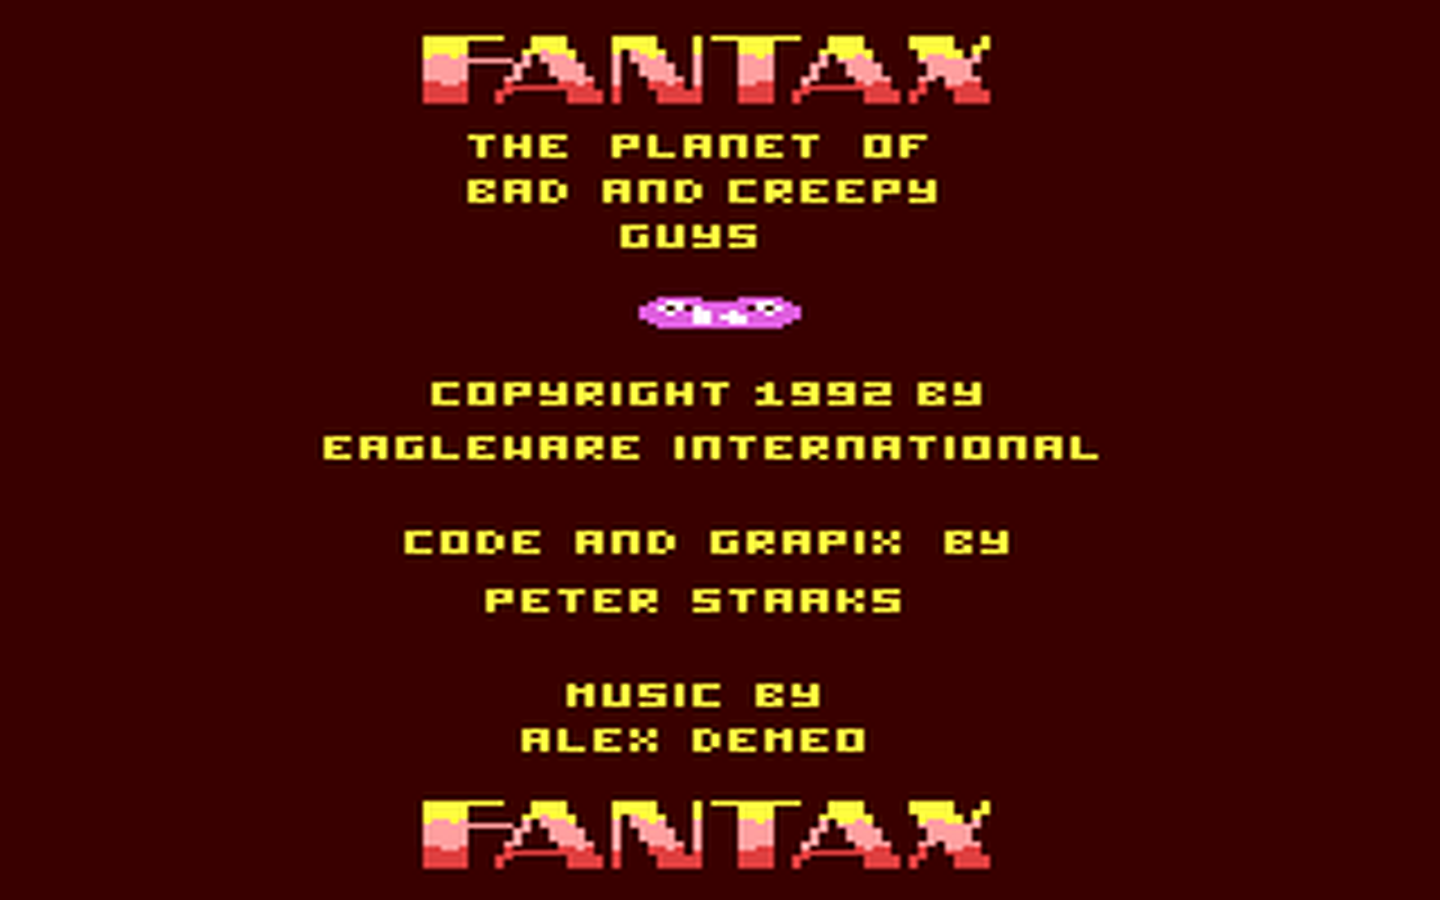 C64 GameBase Fantax Eagleware_International 1992